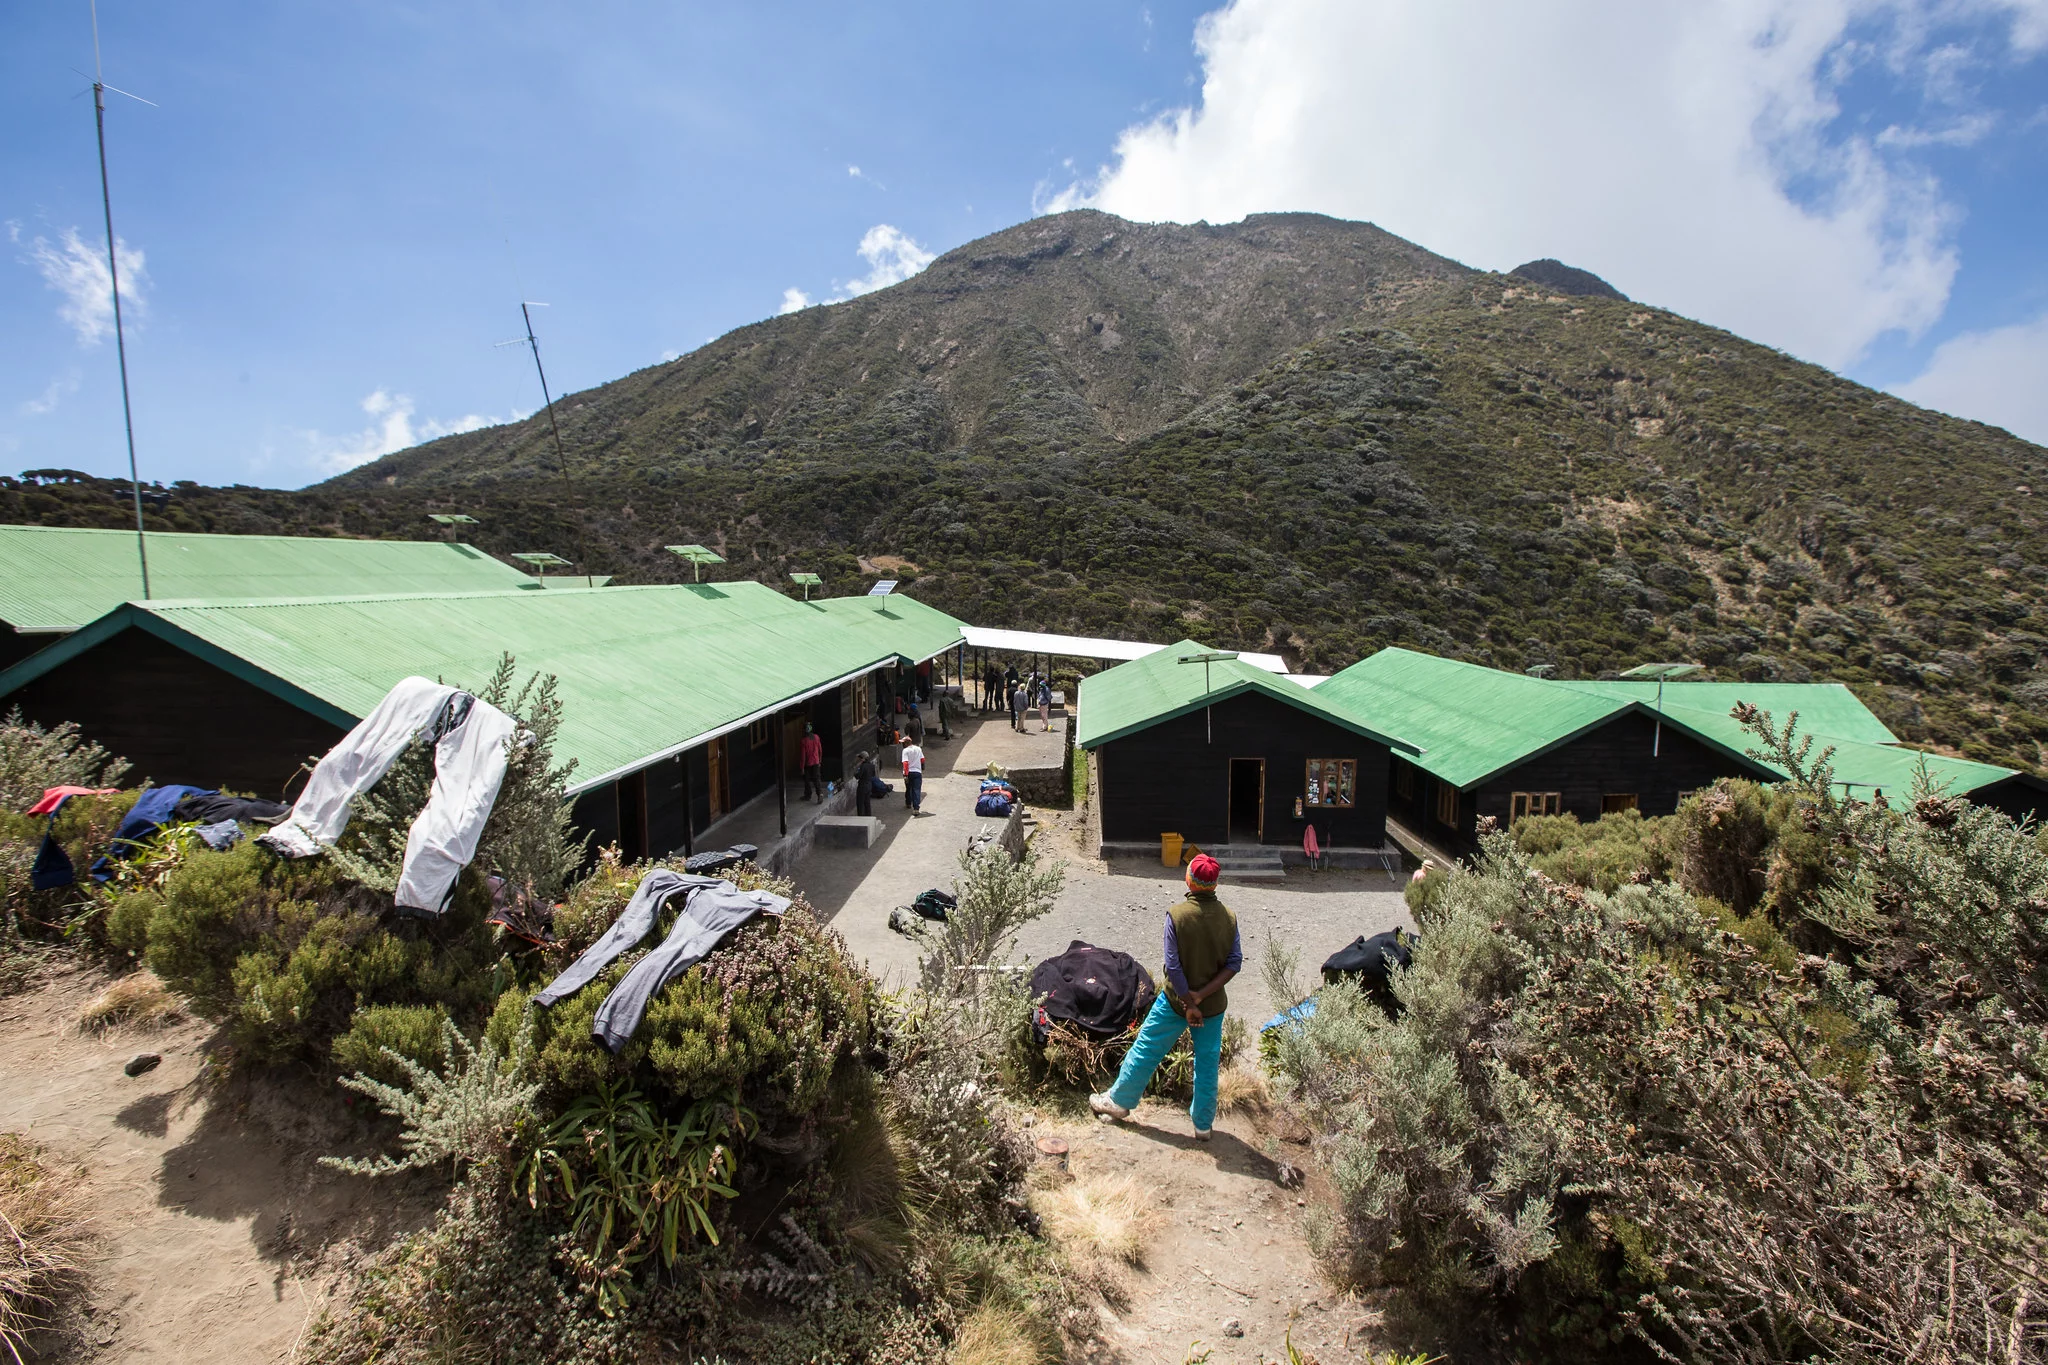 Saddle huts camp